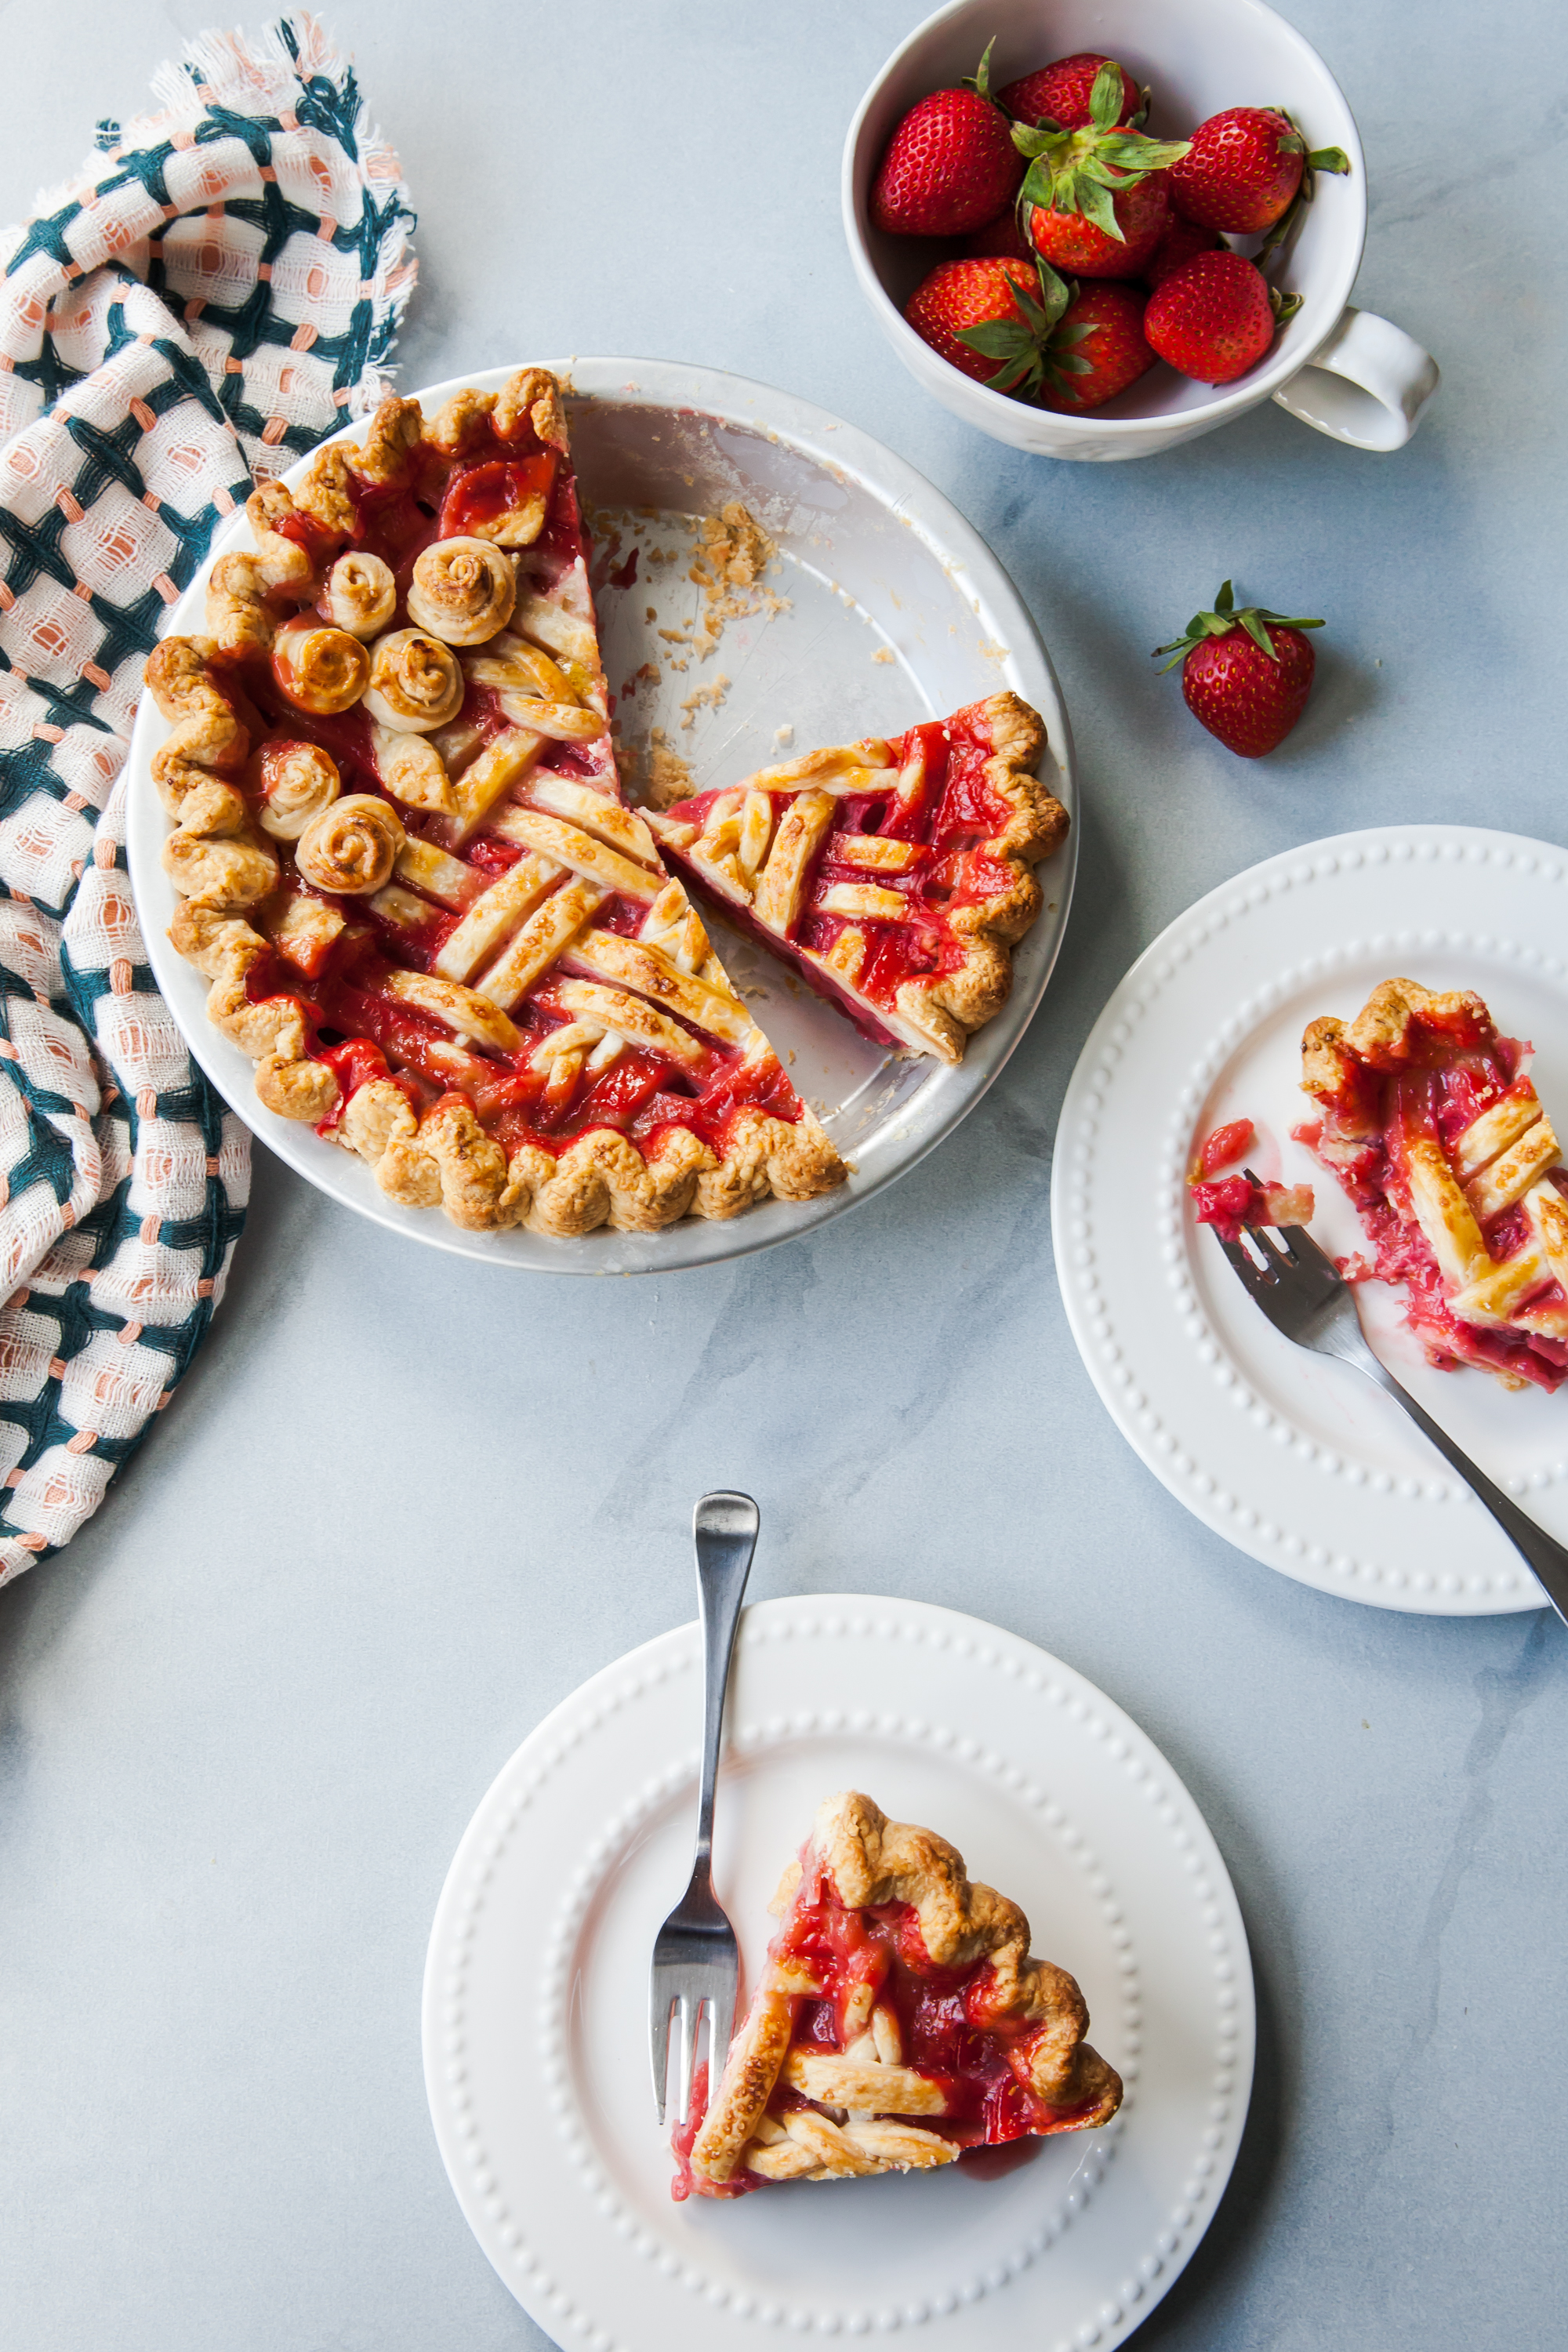 Citrus Strawberry Rhubarb Pie for Pi(e) Day March 14th